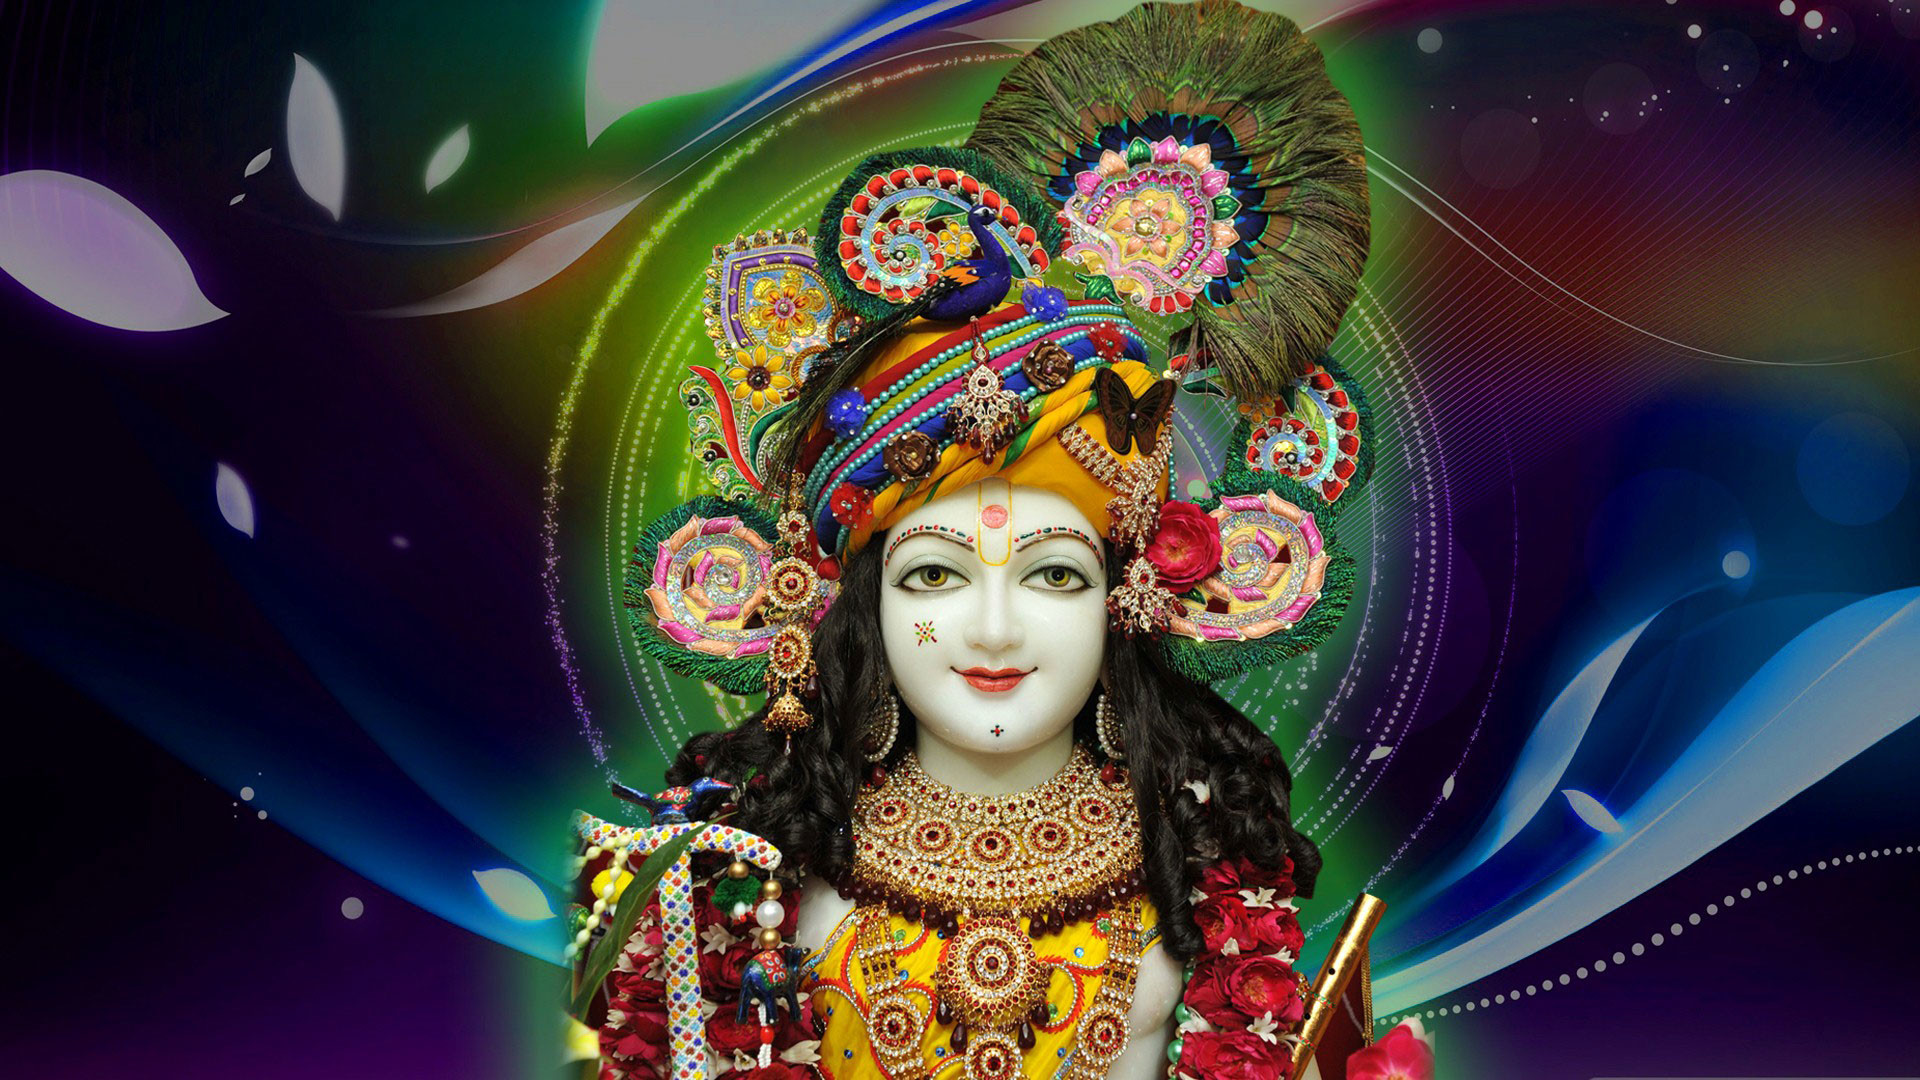 Hindu God Wallpaper Hd For Mobile Free Download - lgnew